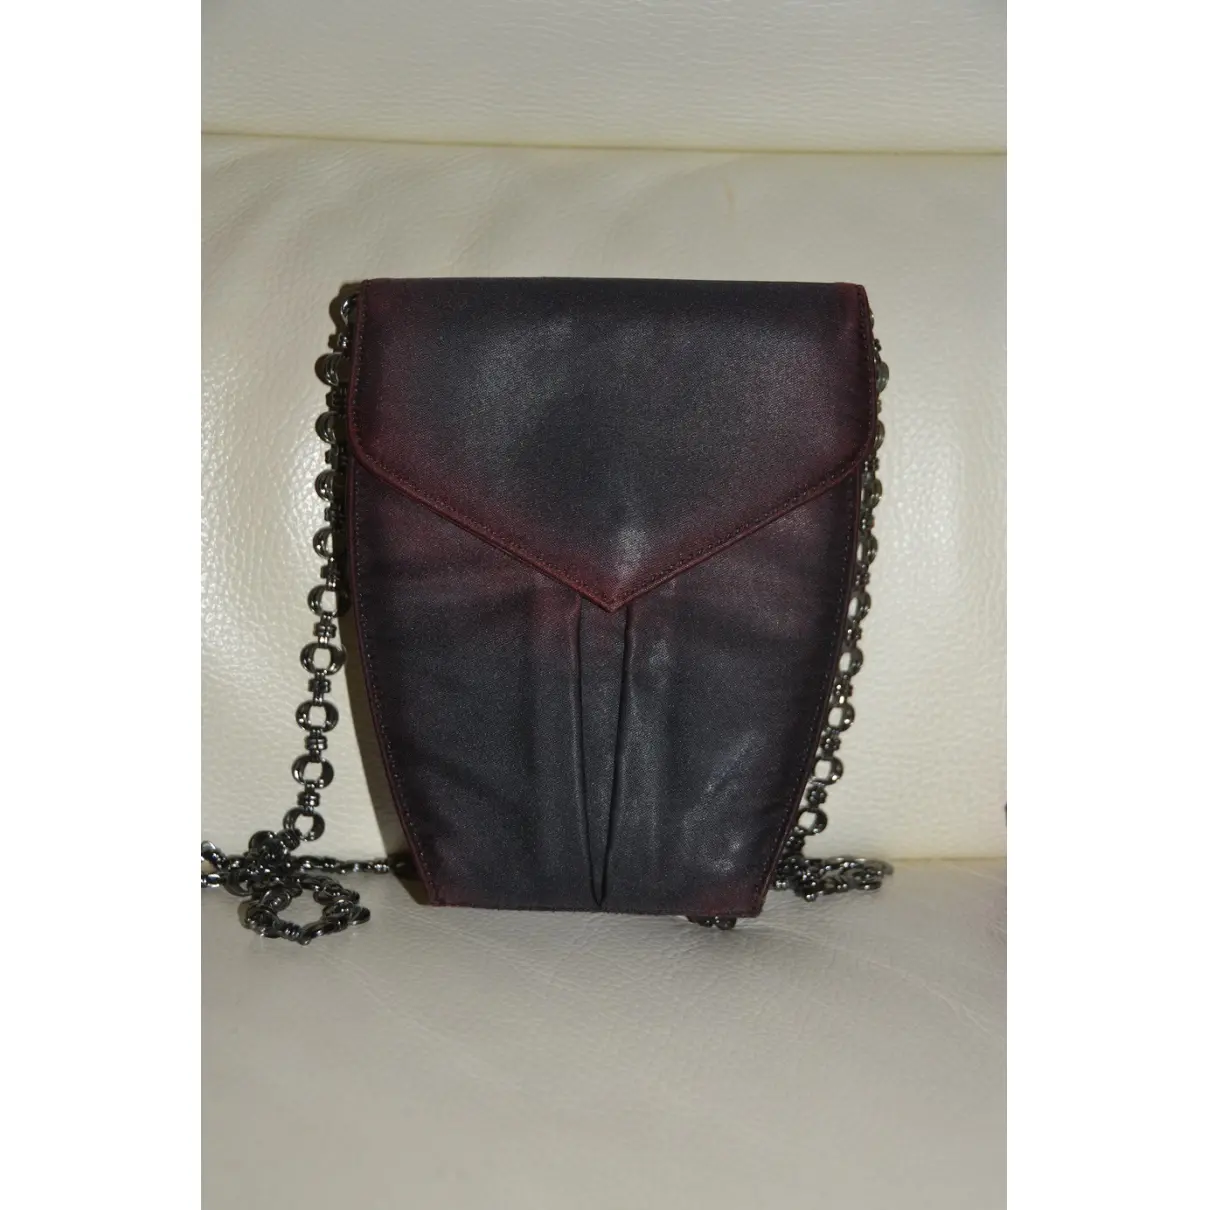 Buy Byblos Cloth crossbody bag online